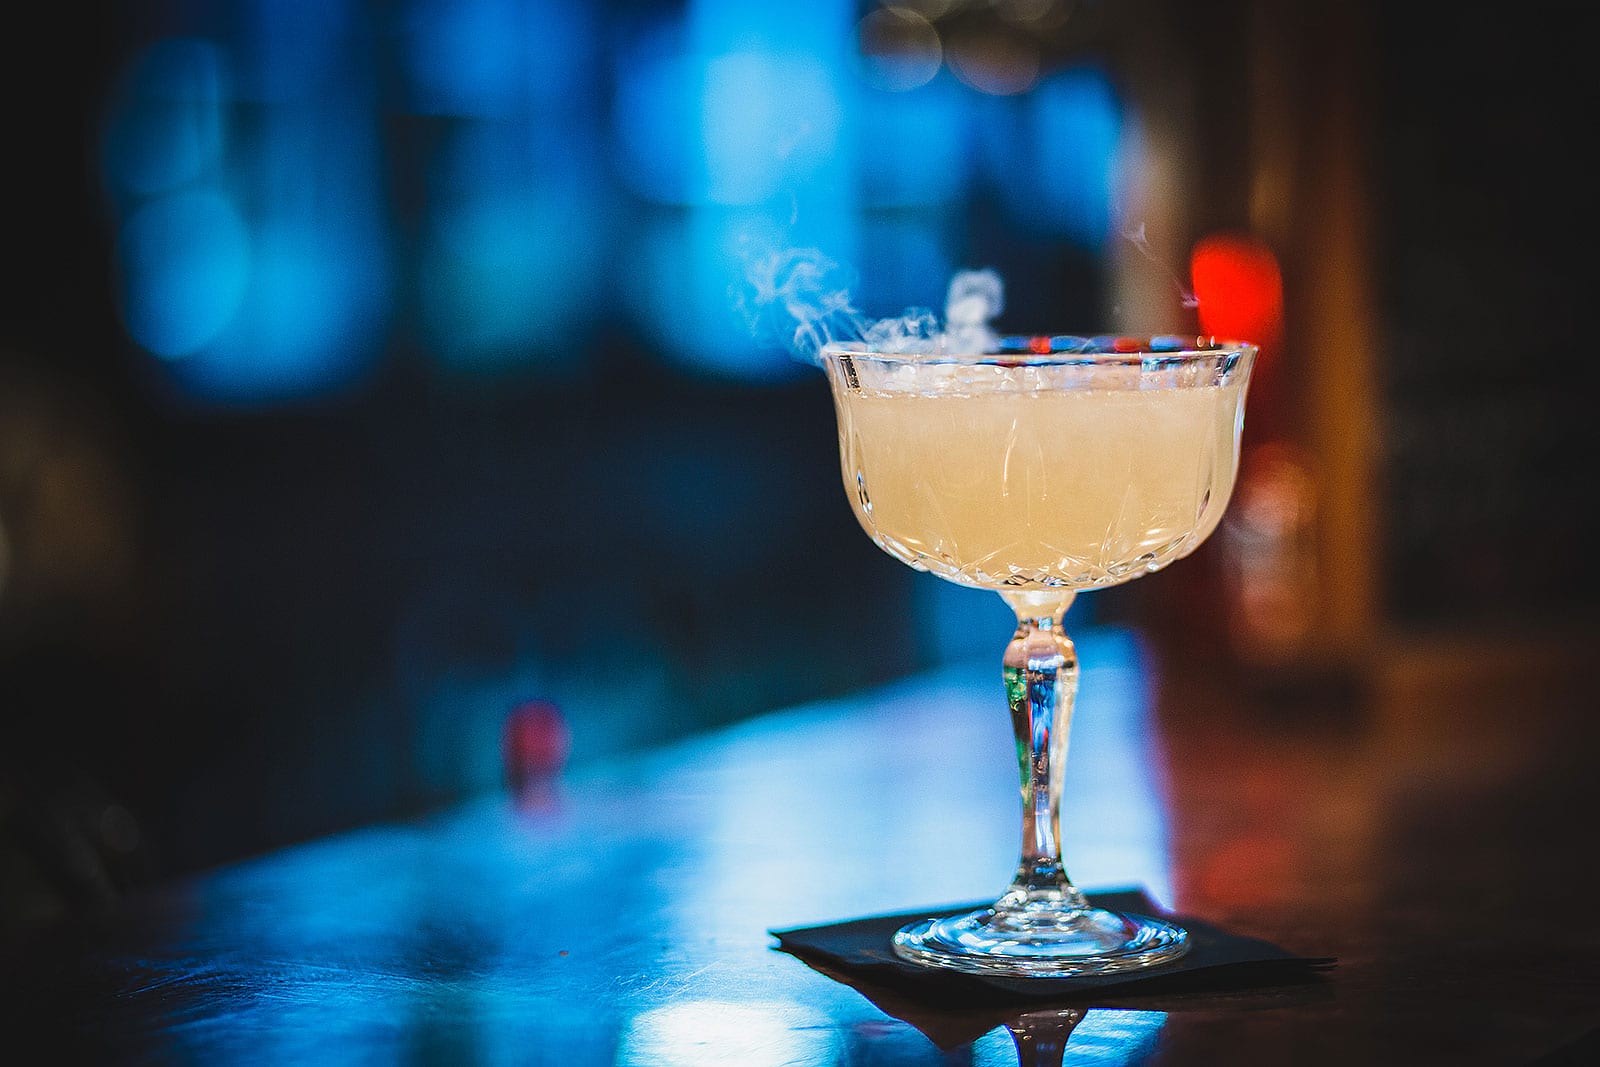 Steampunk Bar – Cocktail bars